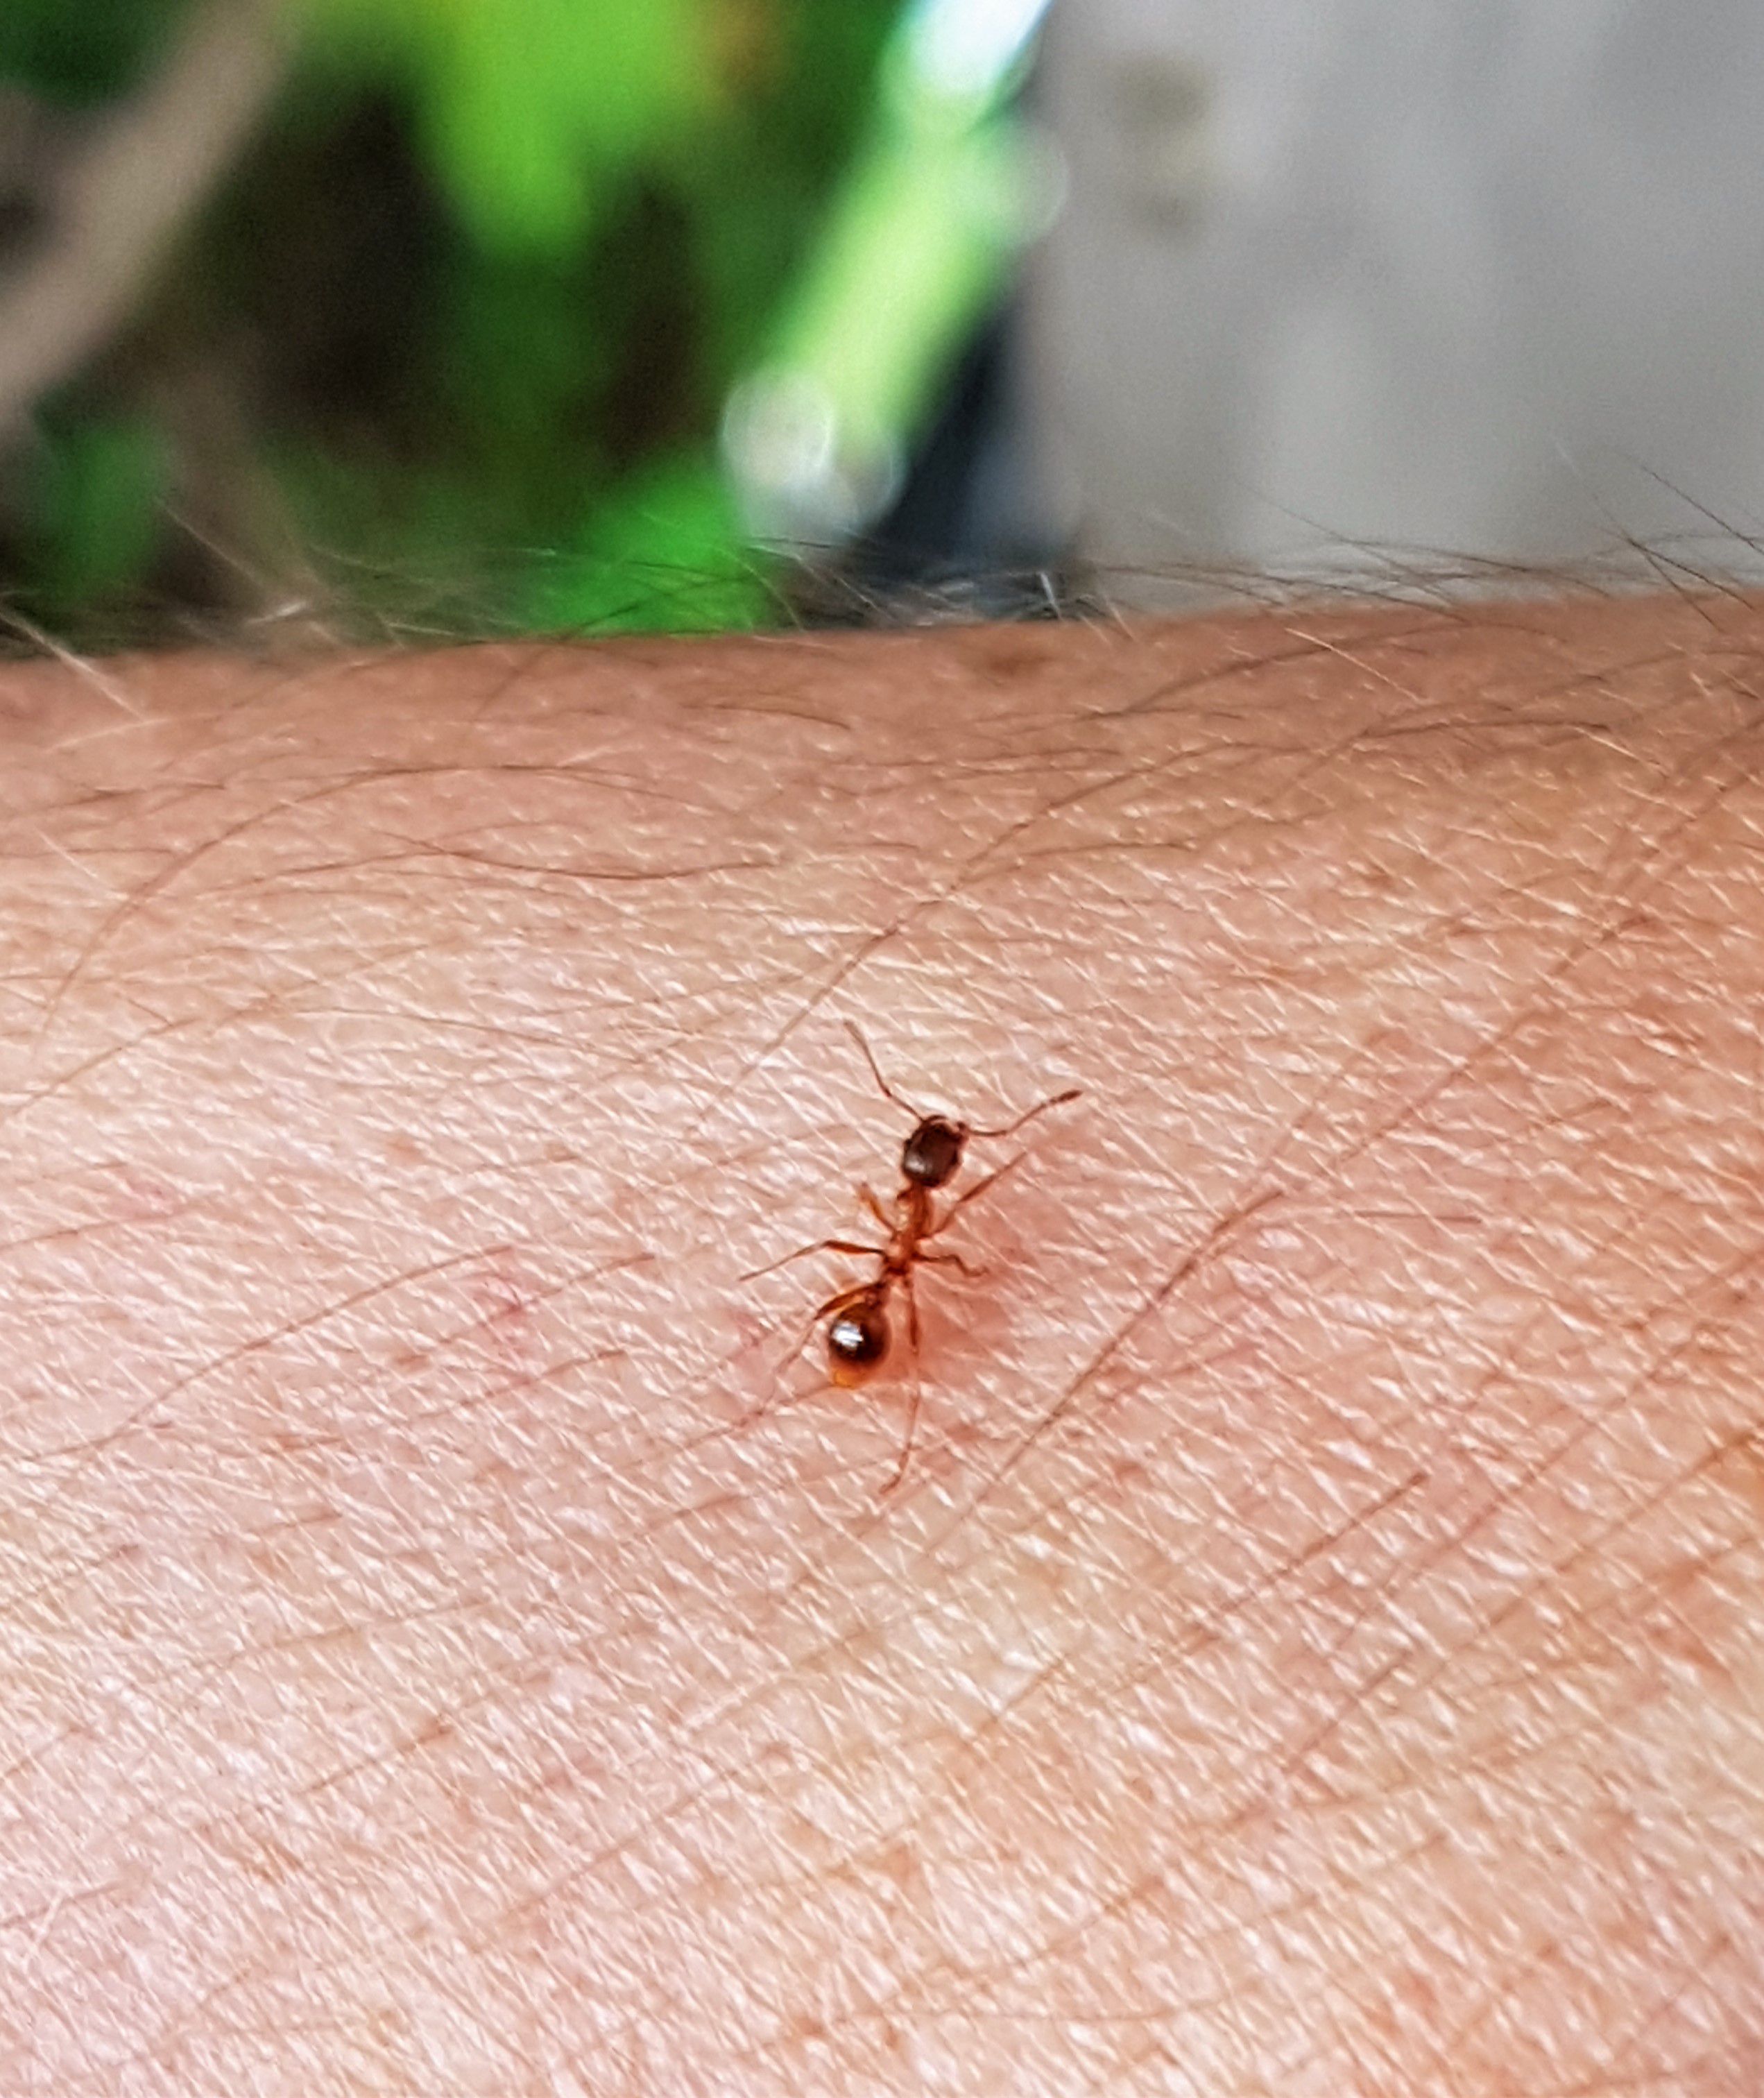 European Fire Ant on an arm